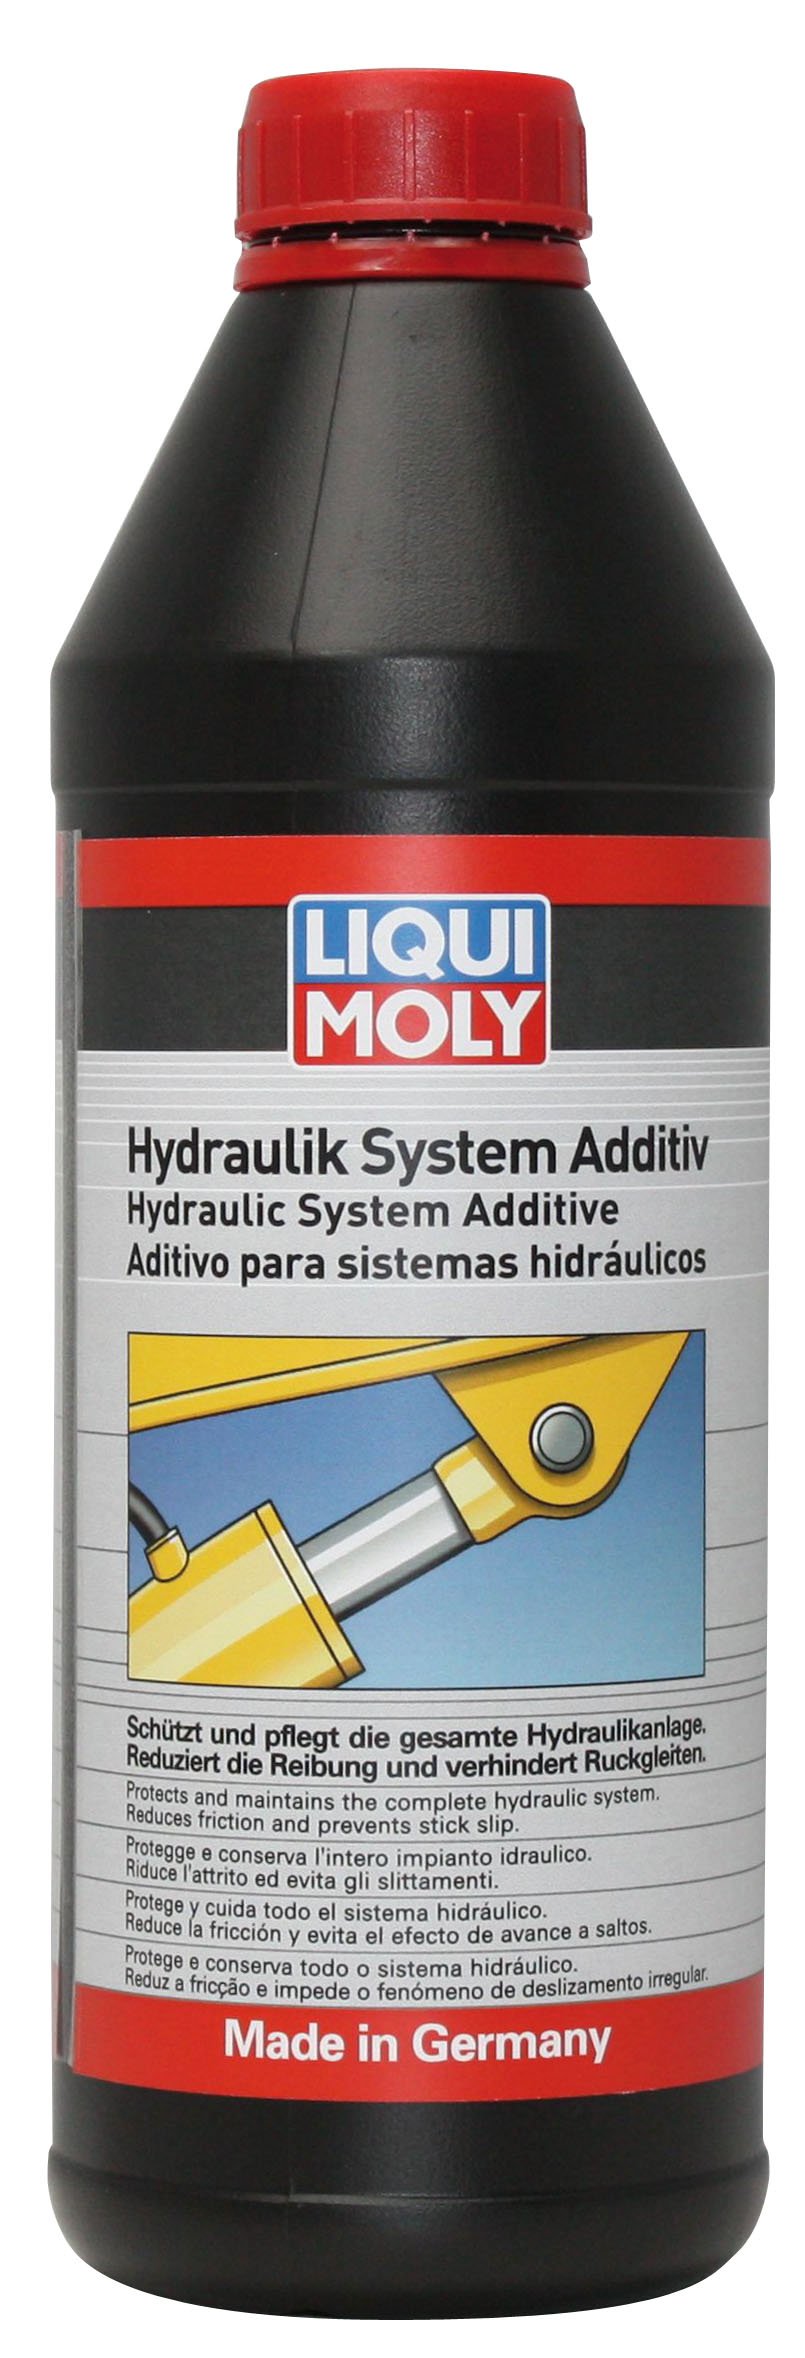 LIQUI MOLY Hydrauliksystem Additiv | 1 L | Öladditiv | Art.-Nr.: 5116 von Liqui Moly